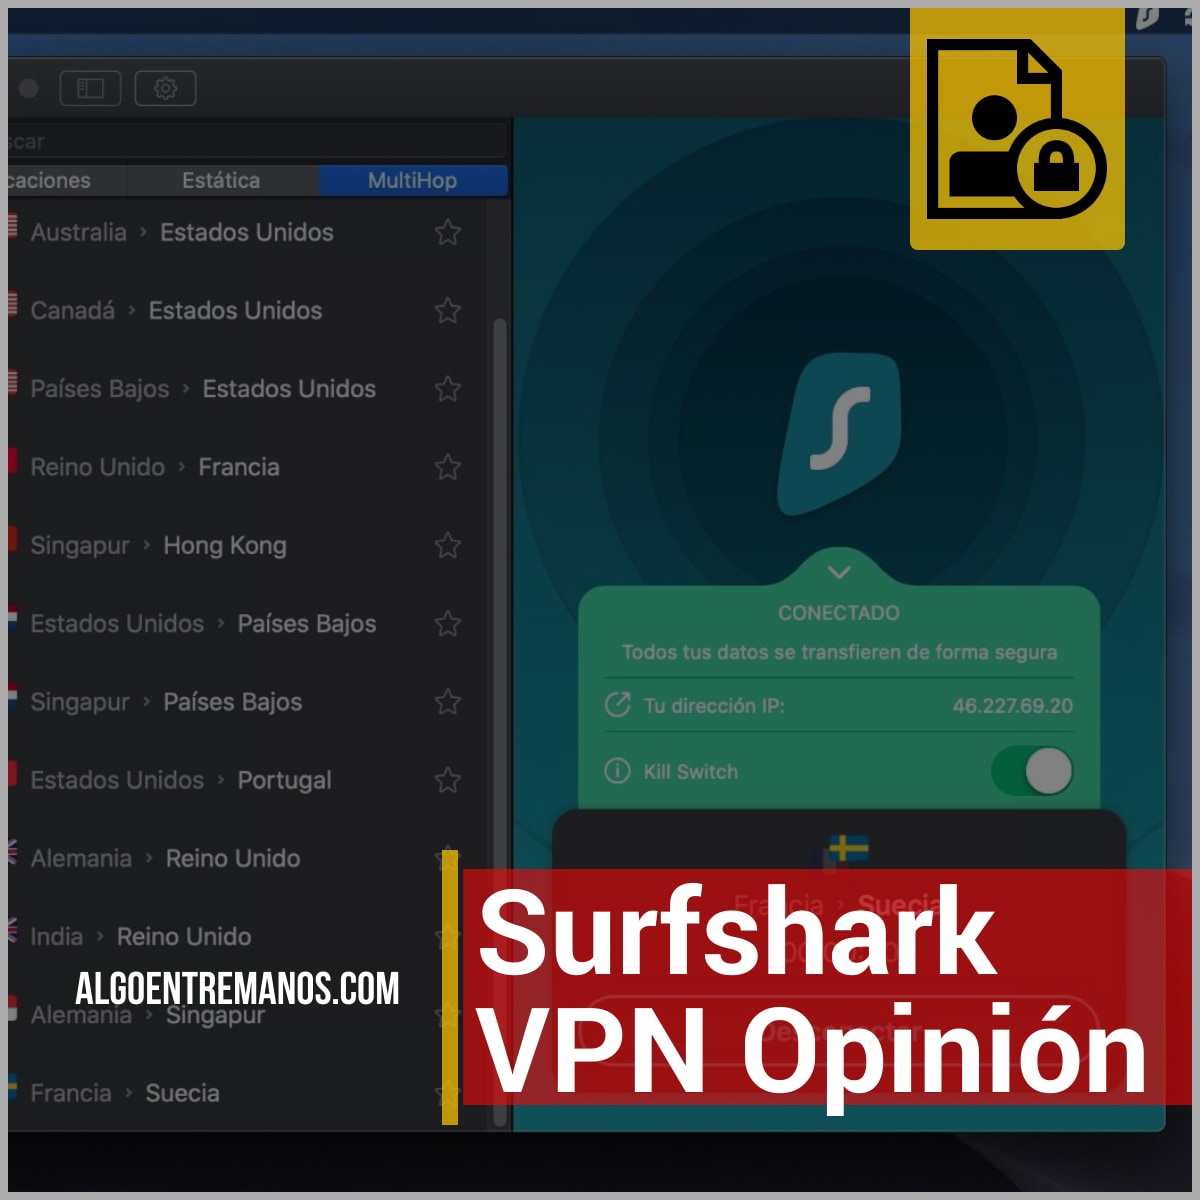 Surfshark VPN - Opinión y review